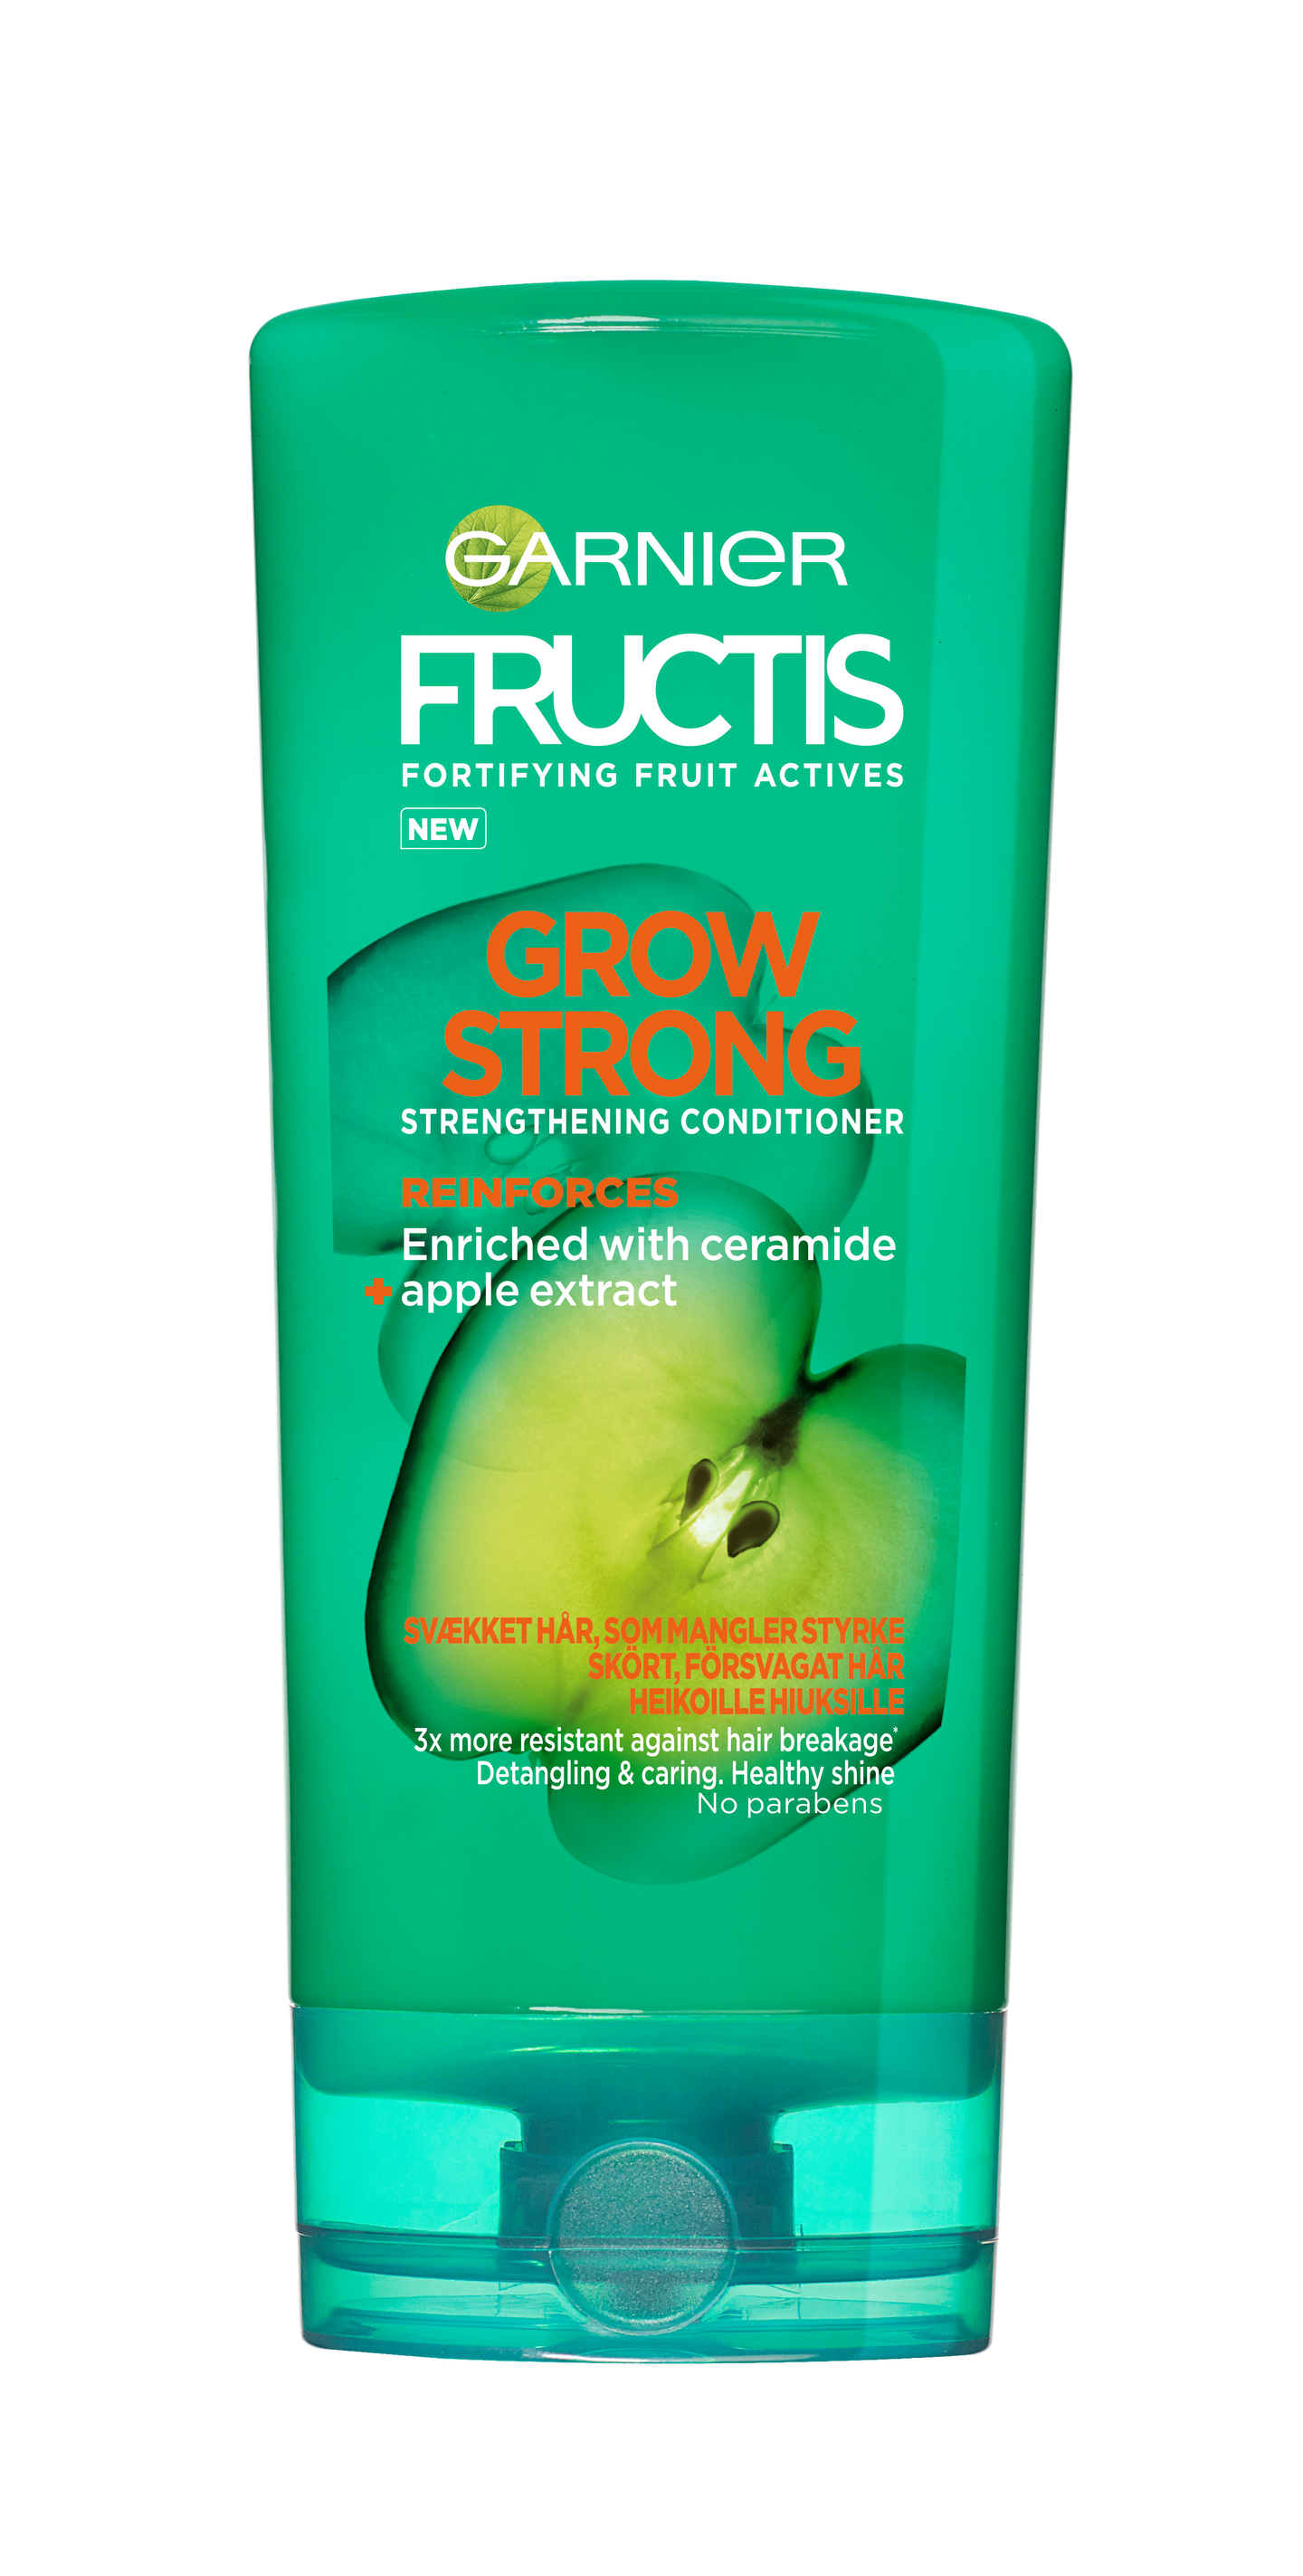 Garnier Fructis hoitoaine 200ml Grow Strong heikoille hiuksille